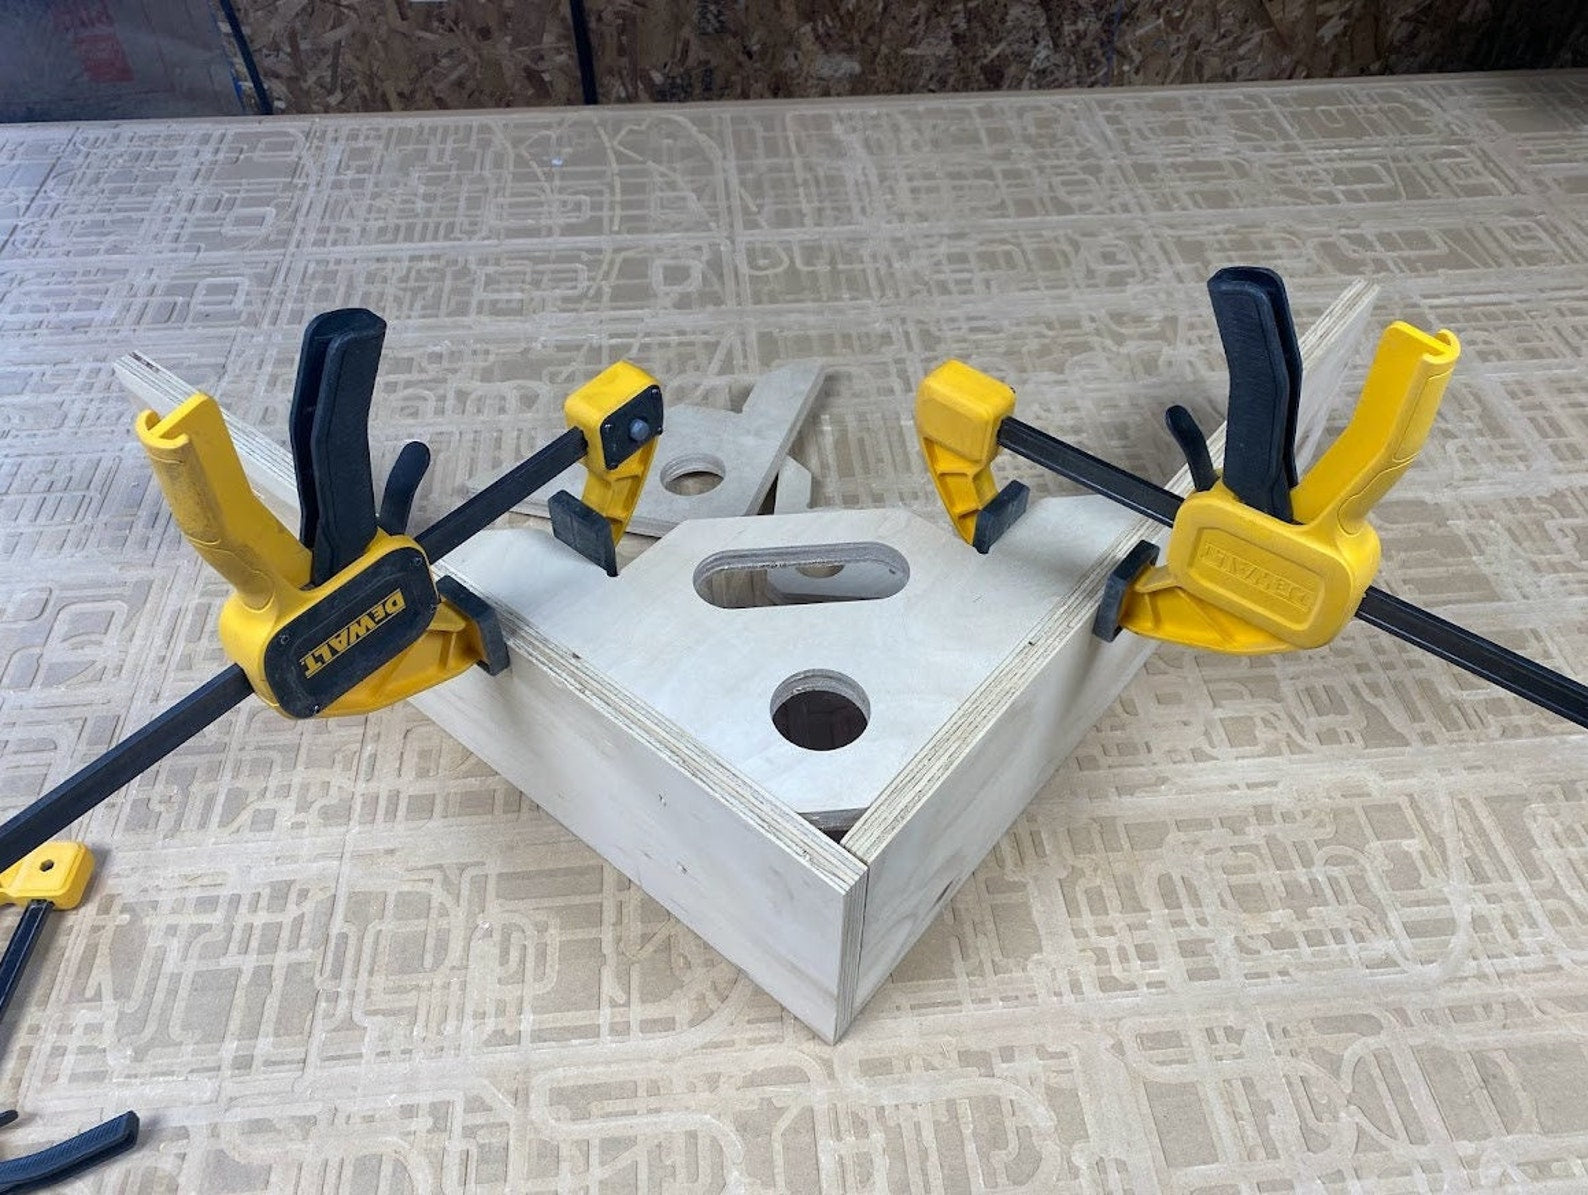 CNC Router Files Corner Clamp Jig Cabinet Squares 3D Model – dryforge